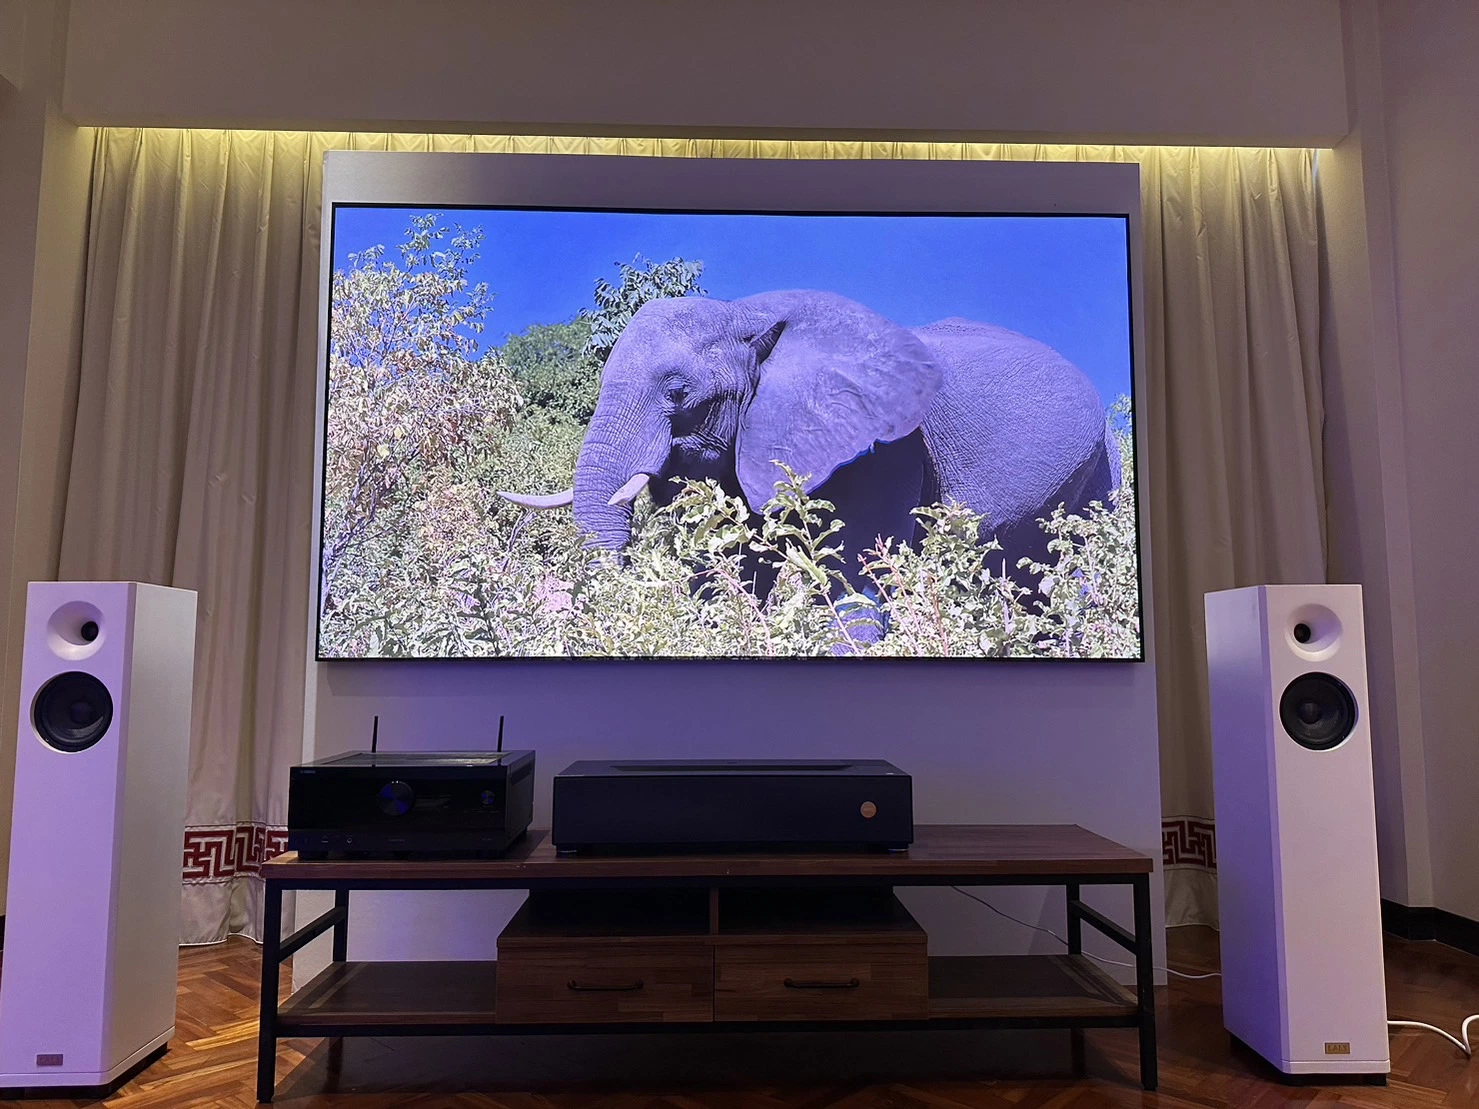 Fscreen 120 pulgadas Aura serie Fresnel ALR rechazo de luz ambiental Pantalla de proyección para proyector de alcance ultracorto TV láser Home Cine en casa